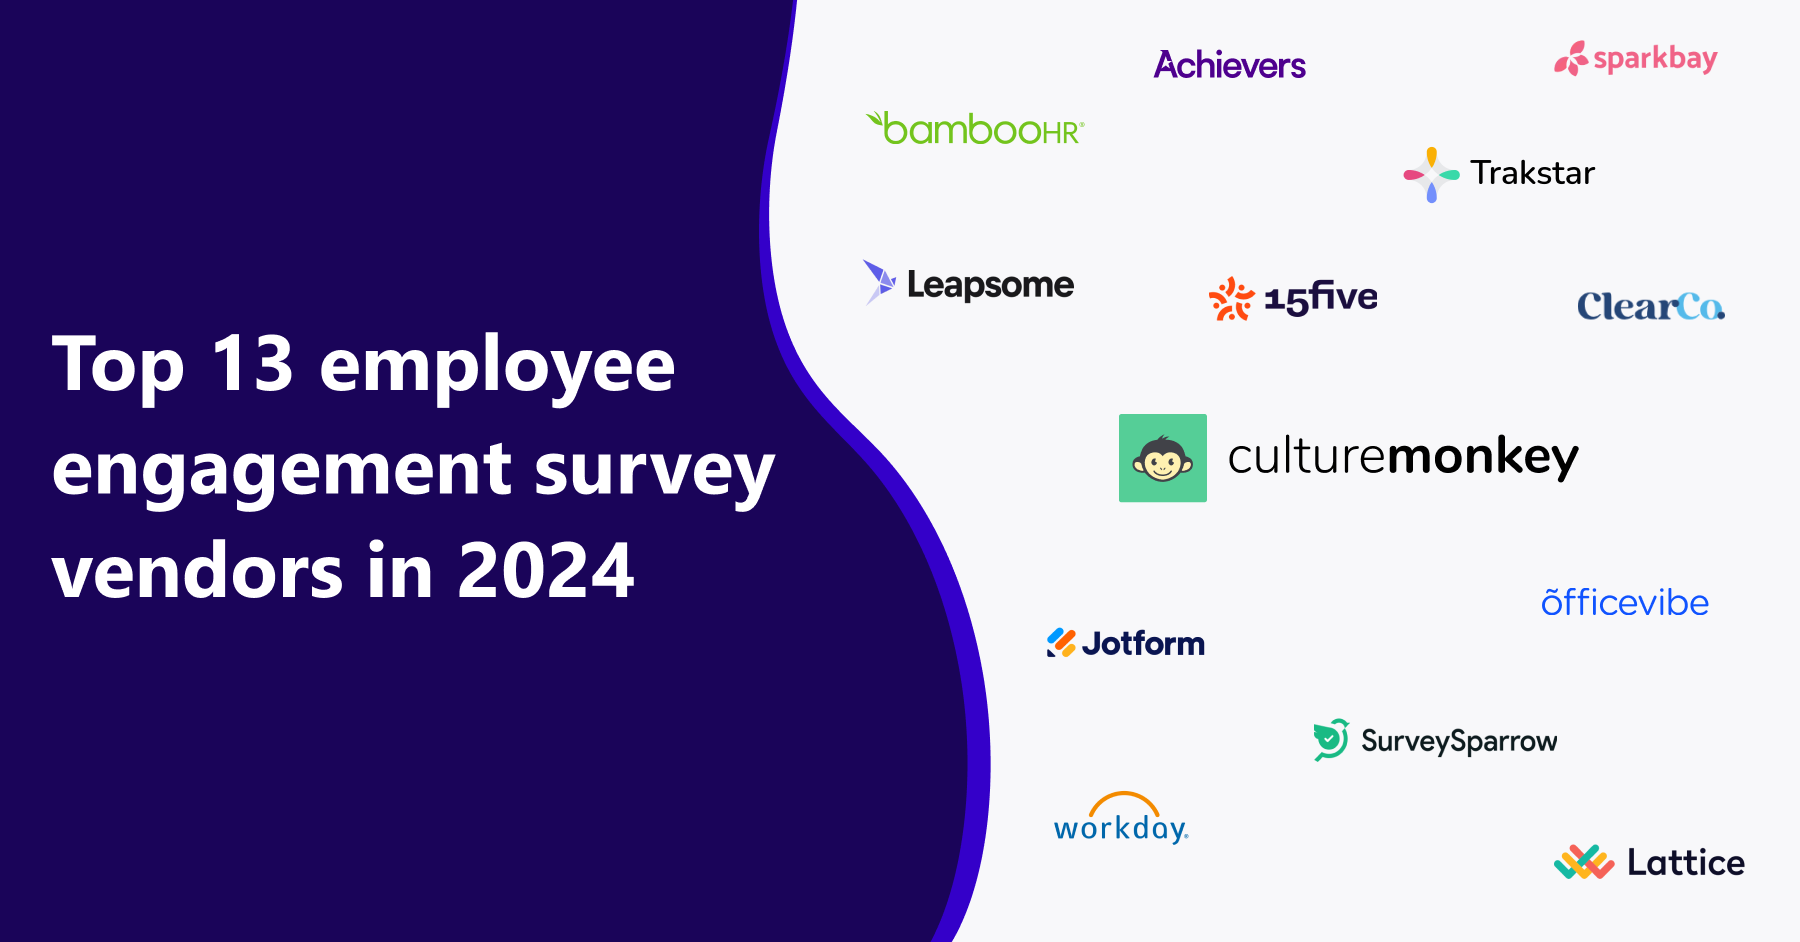 Top 13 employee engagement survey vendors in 2024